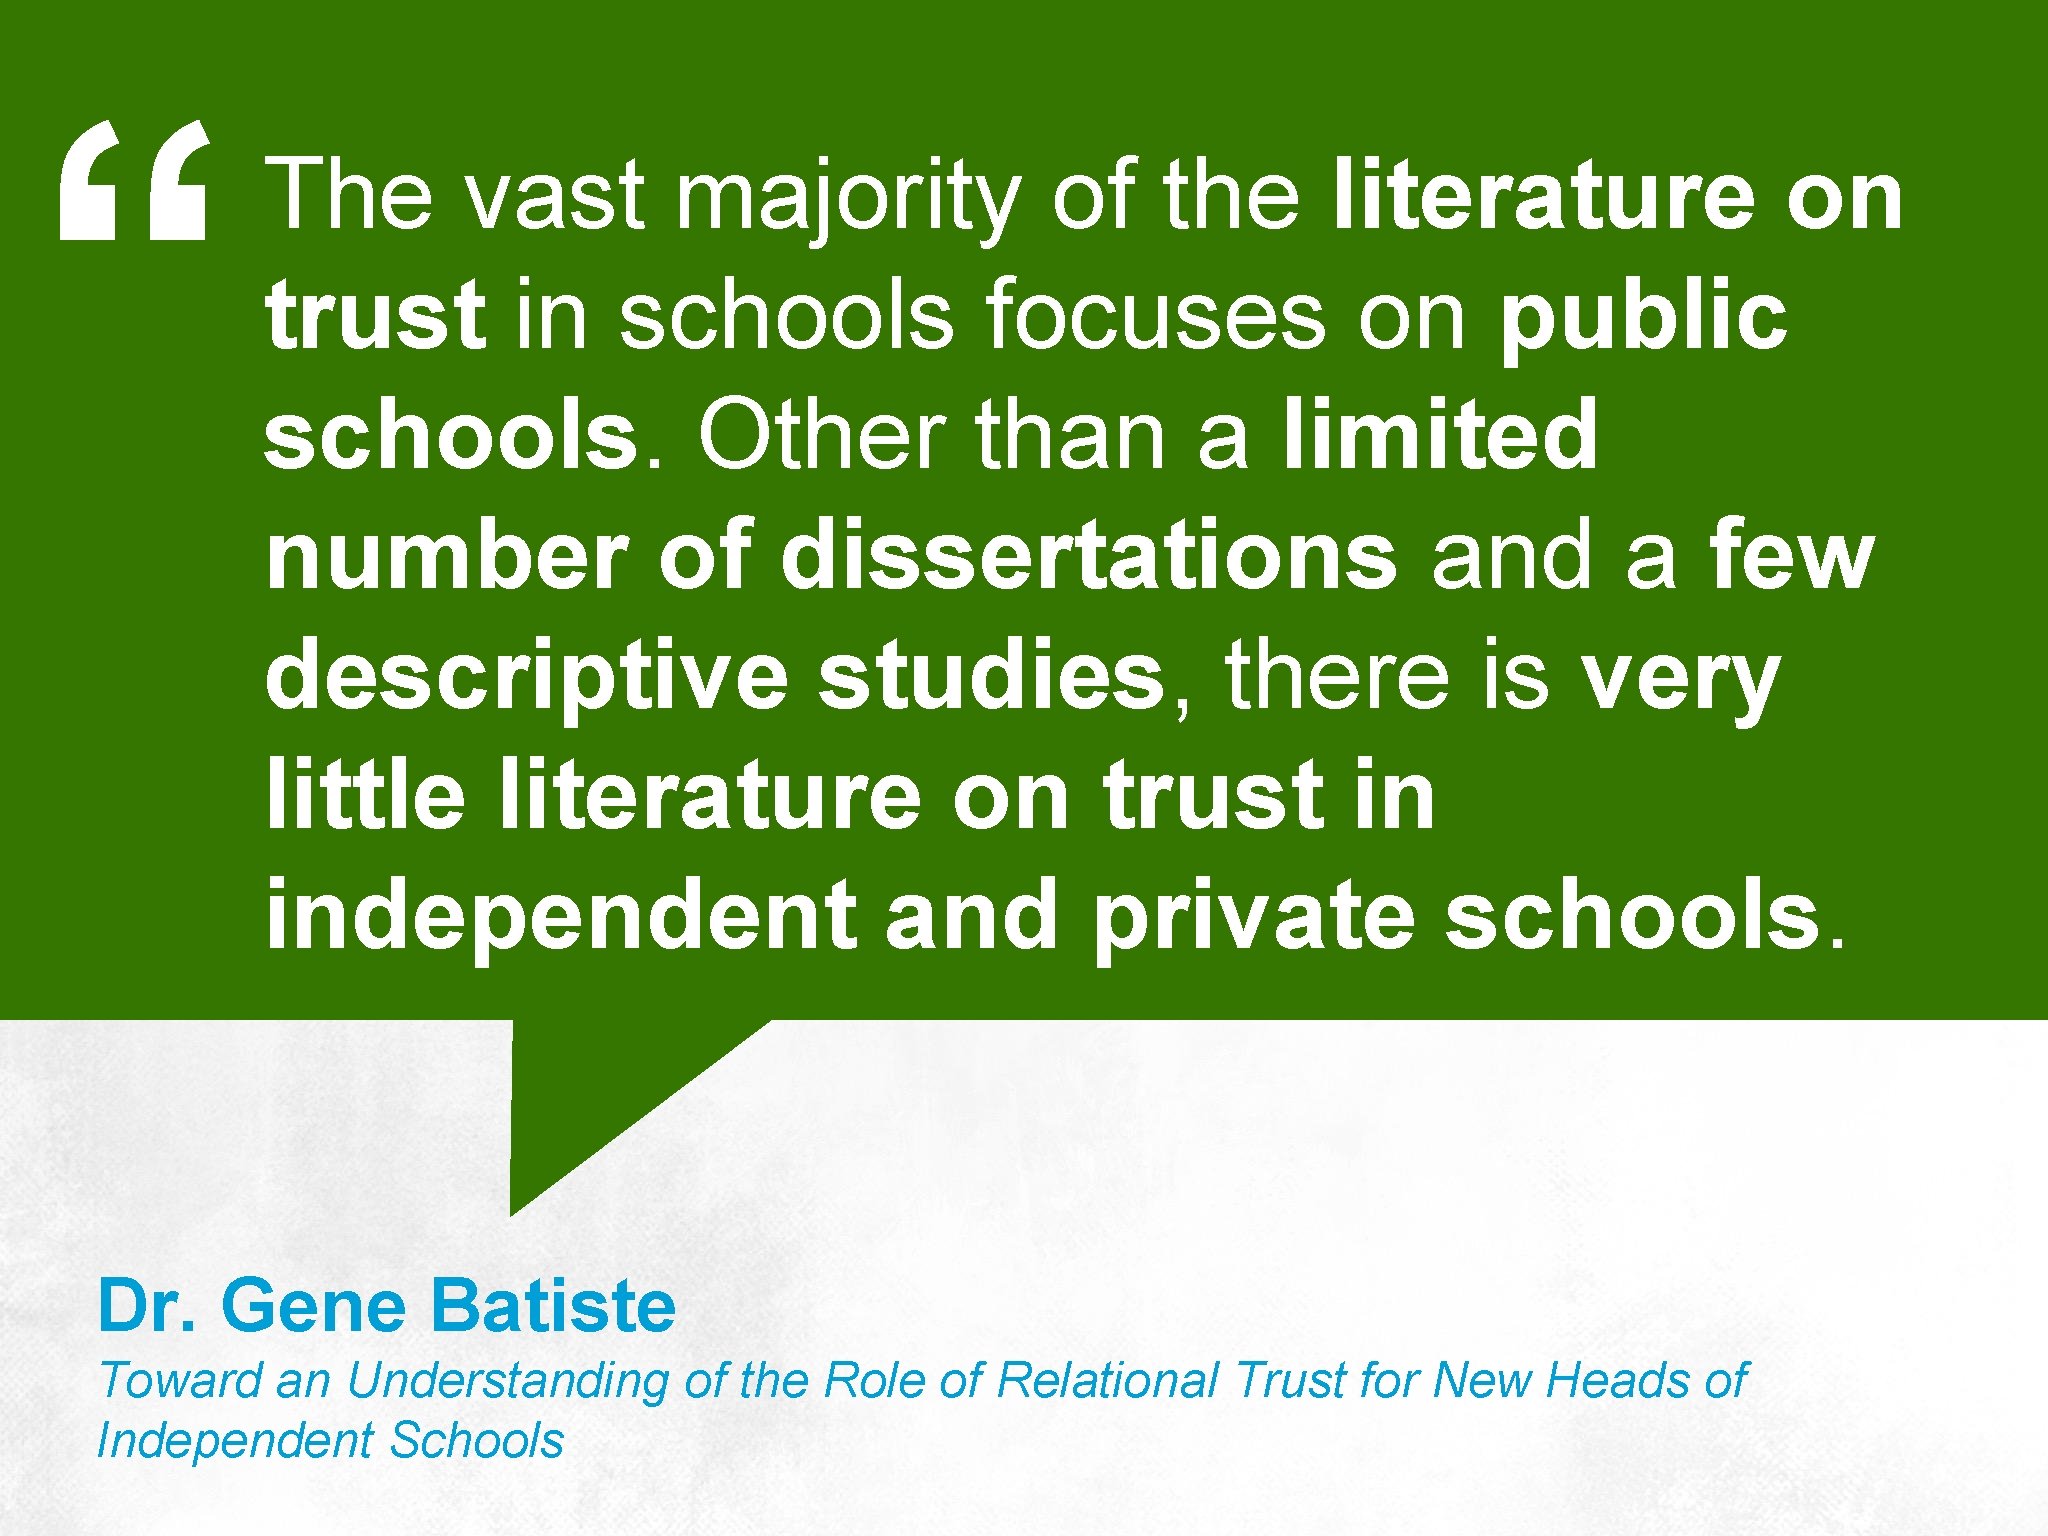 “ The vast majority of the literature on trust in schools focuses on public